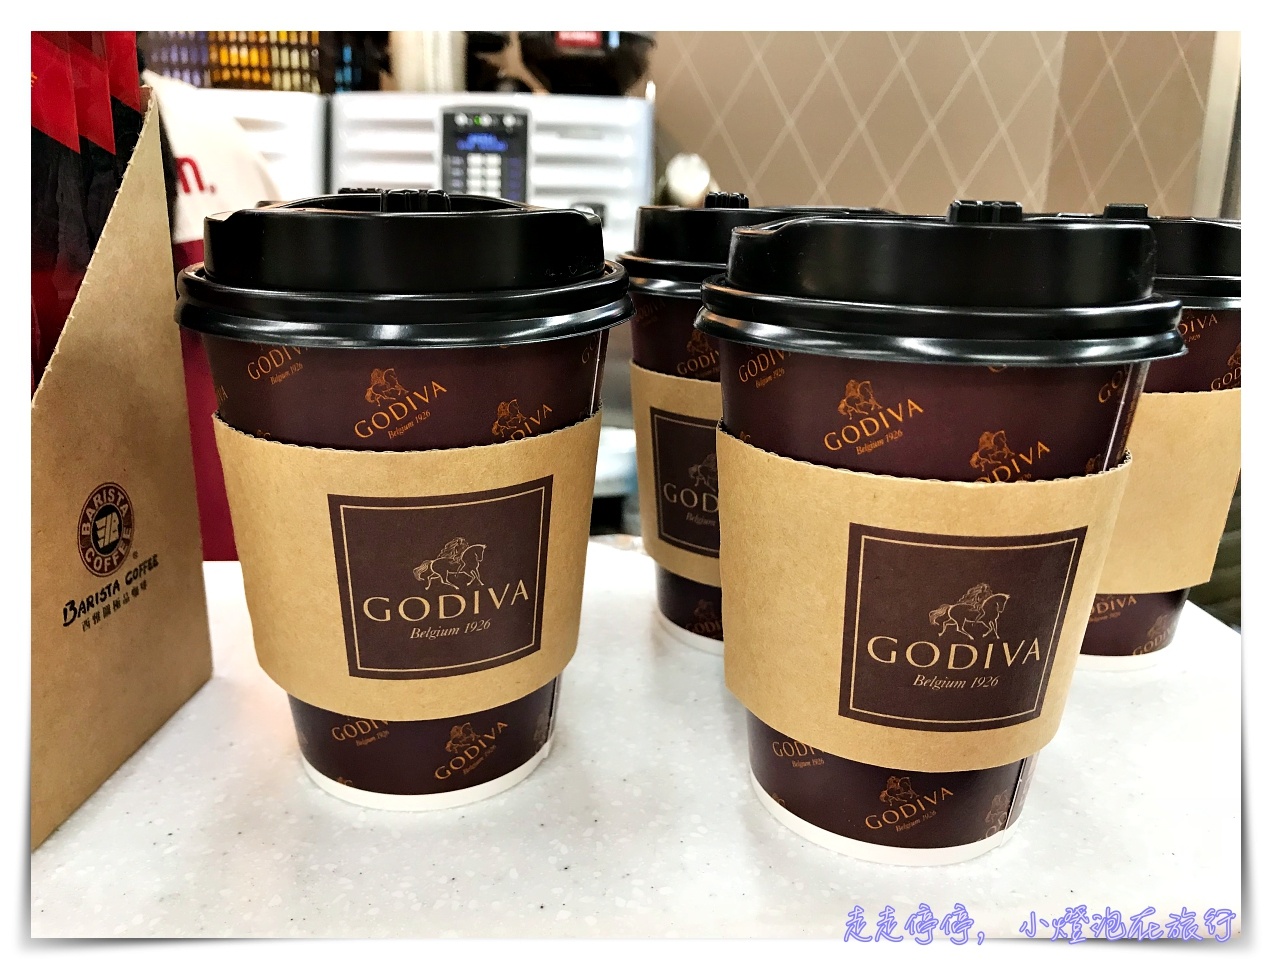 7-11 Godiva經典熱巧克力飲品限量發售，冷冷的天，讓熱巧克力溫暖你吧！12/20起熱情放送～